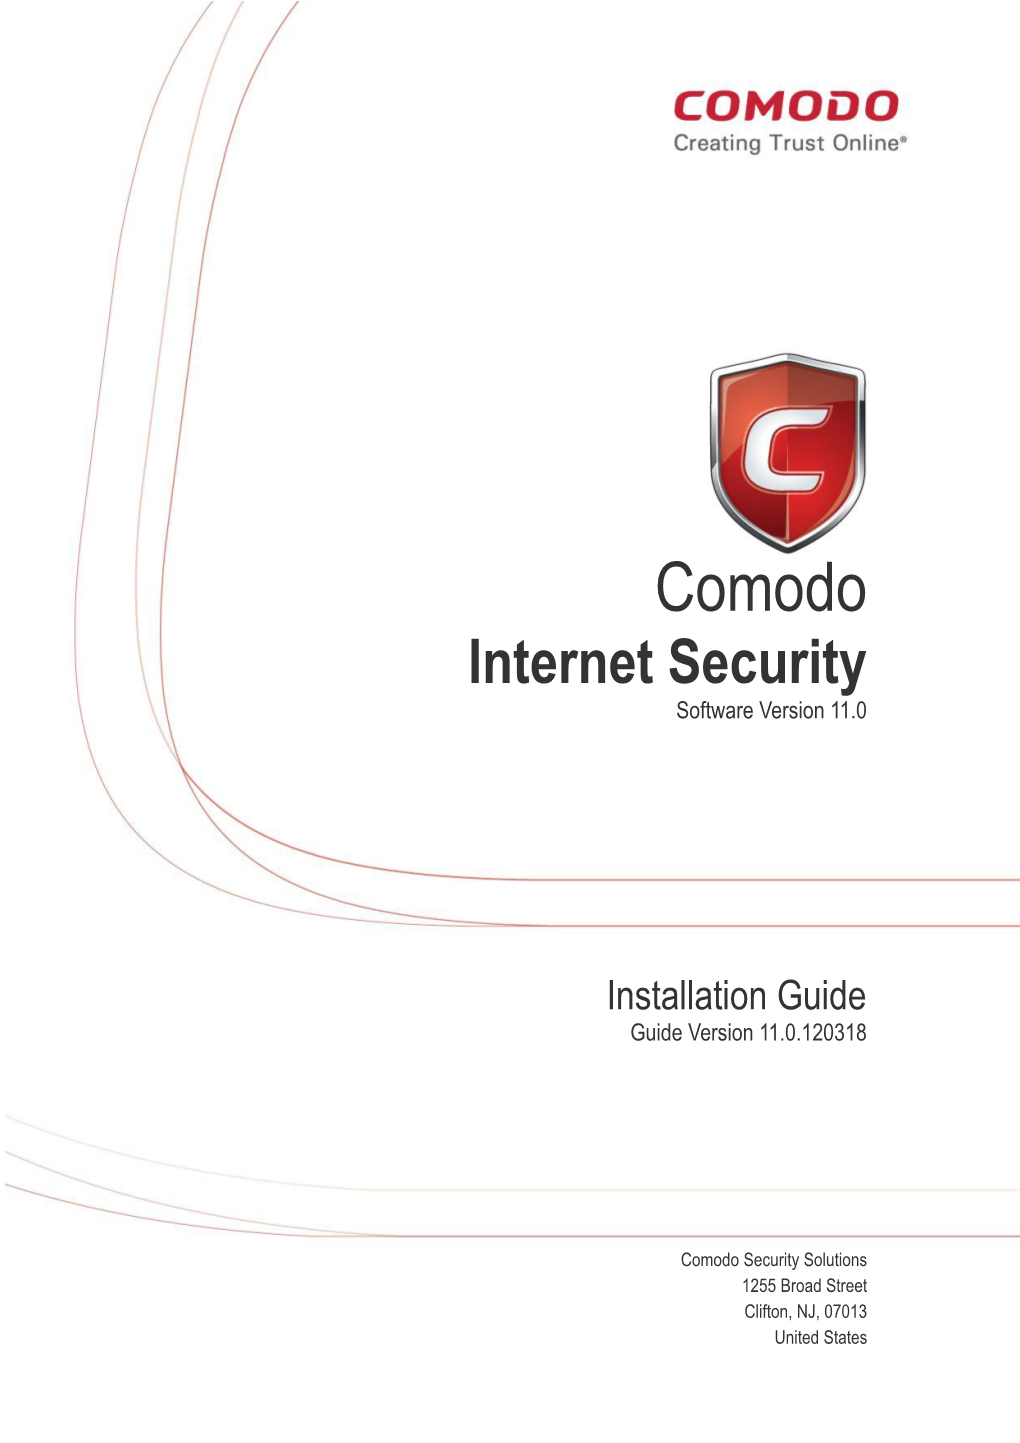 Comodo Internet Security Installation Guide | © 2018 Comodo Security Solutions Inc